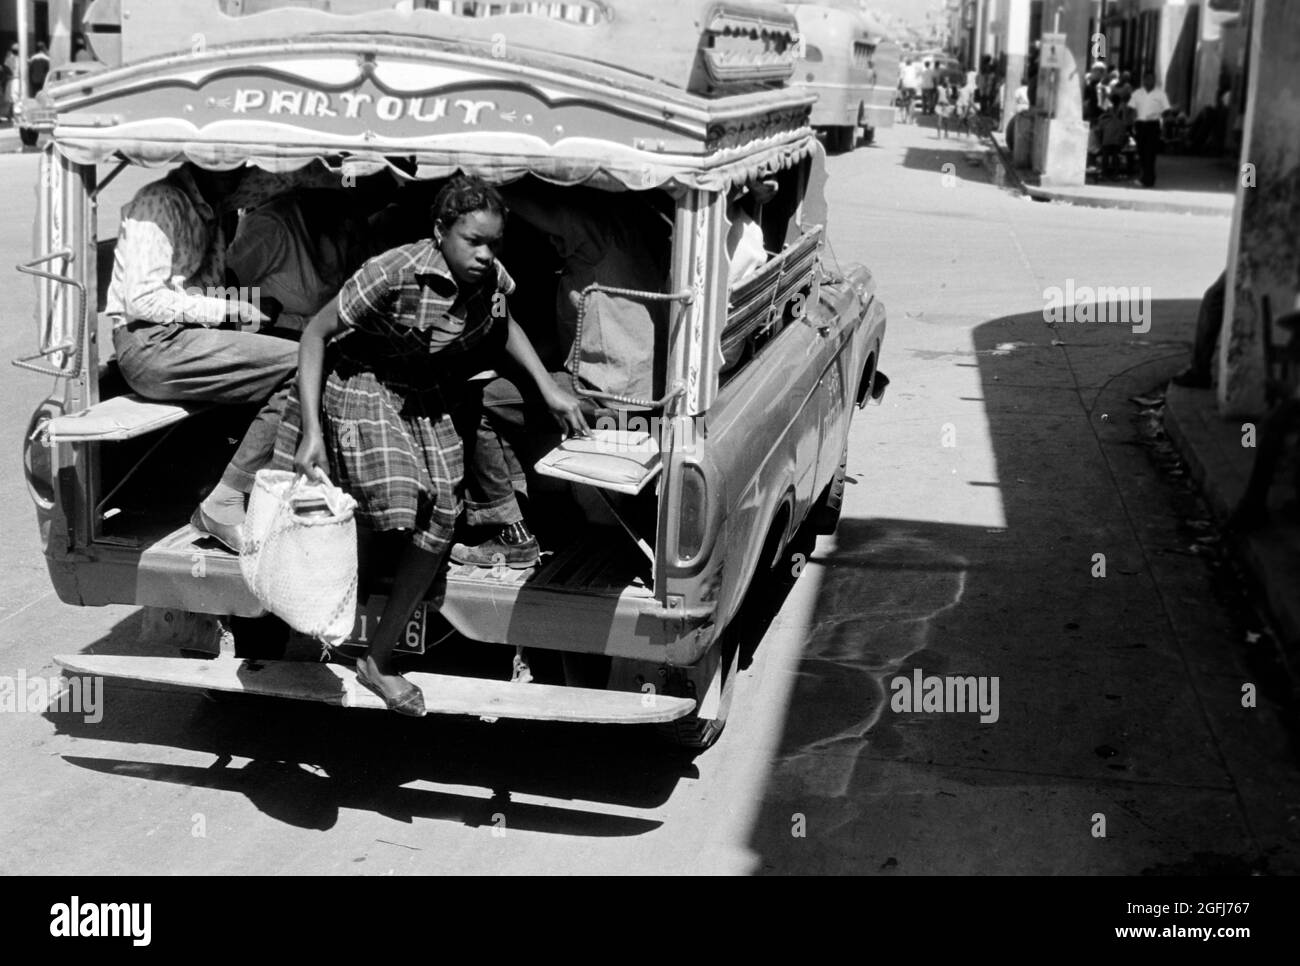 Stadtbusse a Port-au-Prince, Haiti, 1966. Autobus urbani a Port-au-Prince, Haiti, 1966. Foto Stock